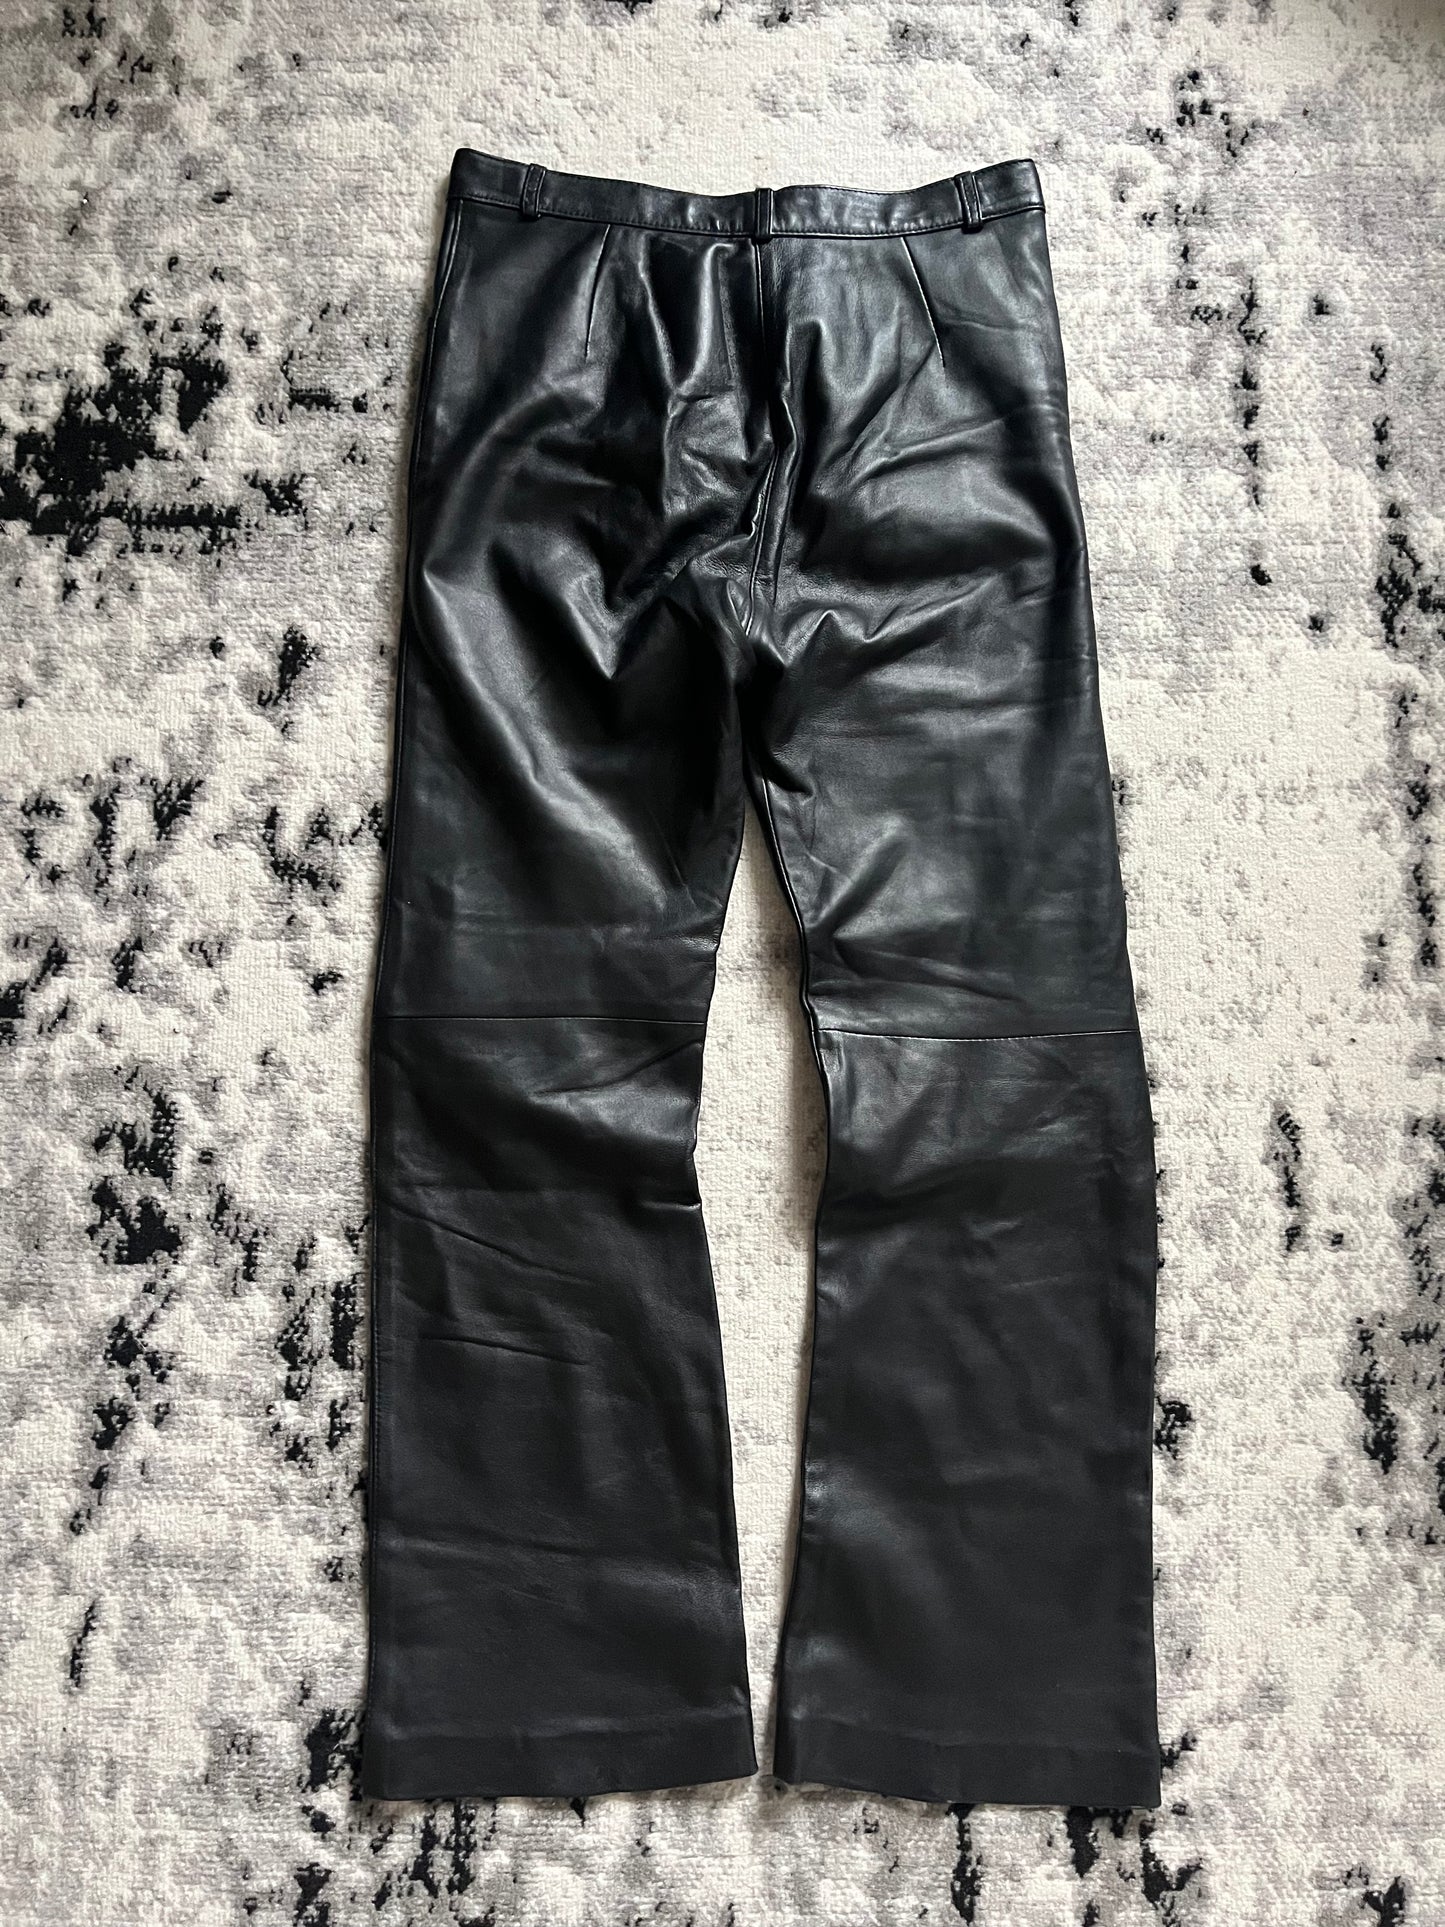 Roberto Cavalli Art Collection Biker Leather Pants (M)